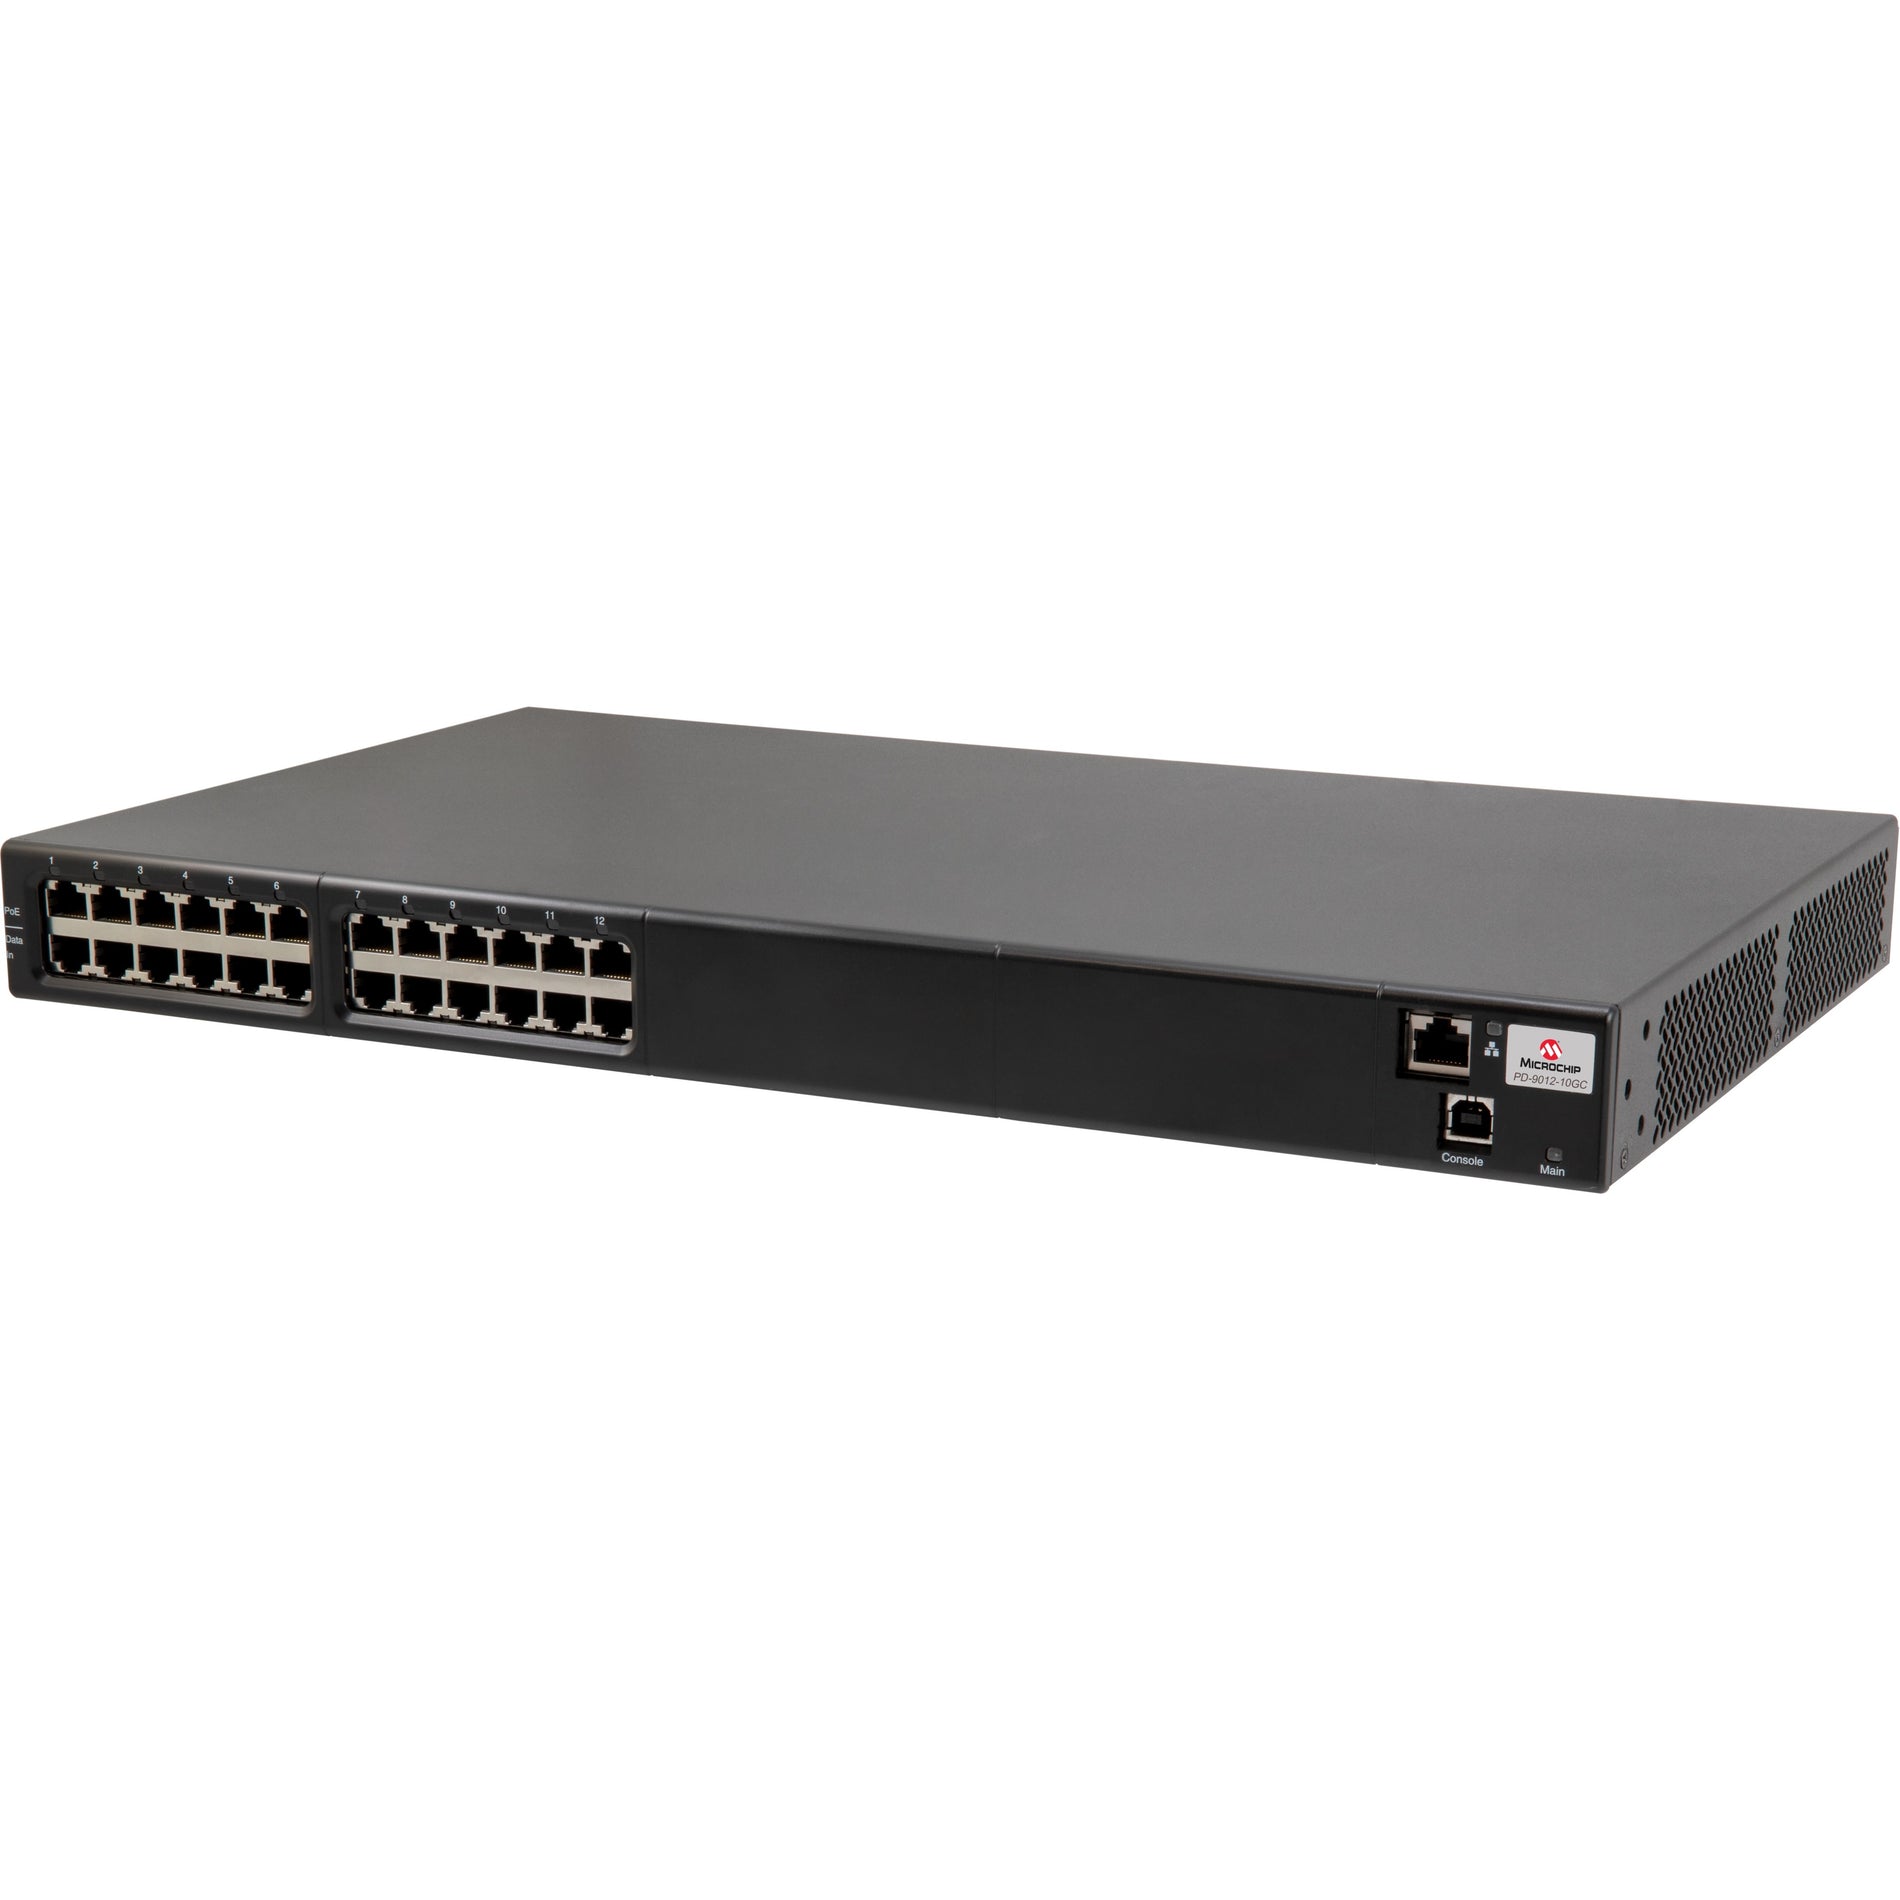 Microchip PD-9012G/ACDC/M-US 12-port Power over Ethernet Midspan, High-Power, Gigabit PoE Hub